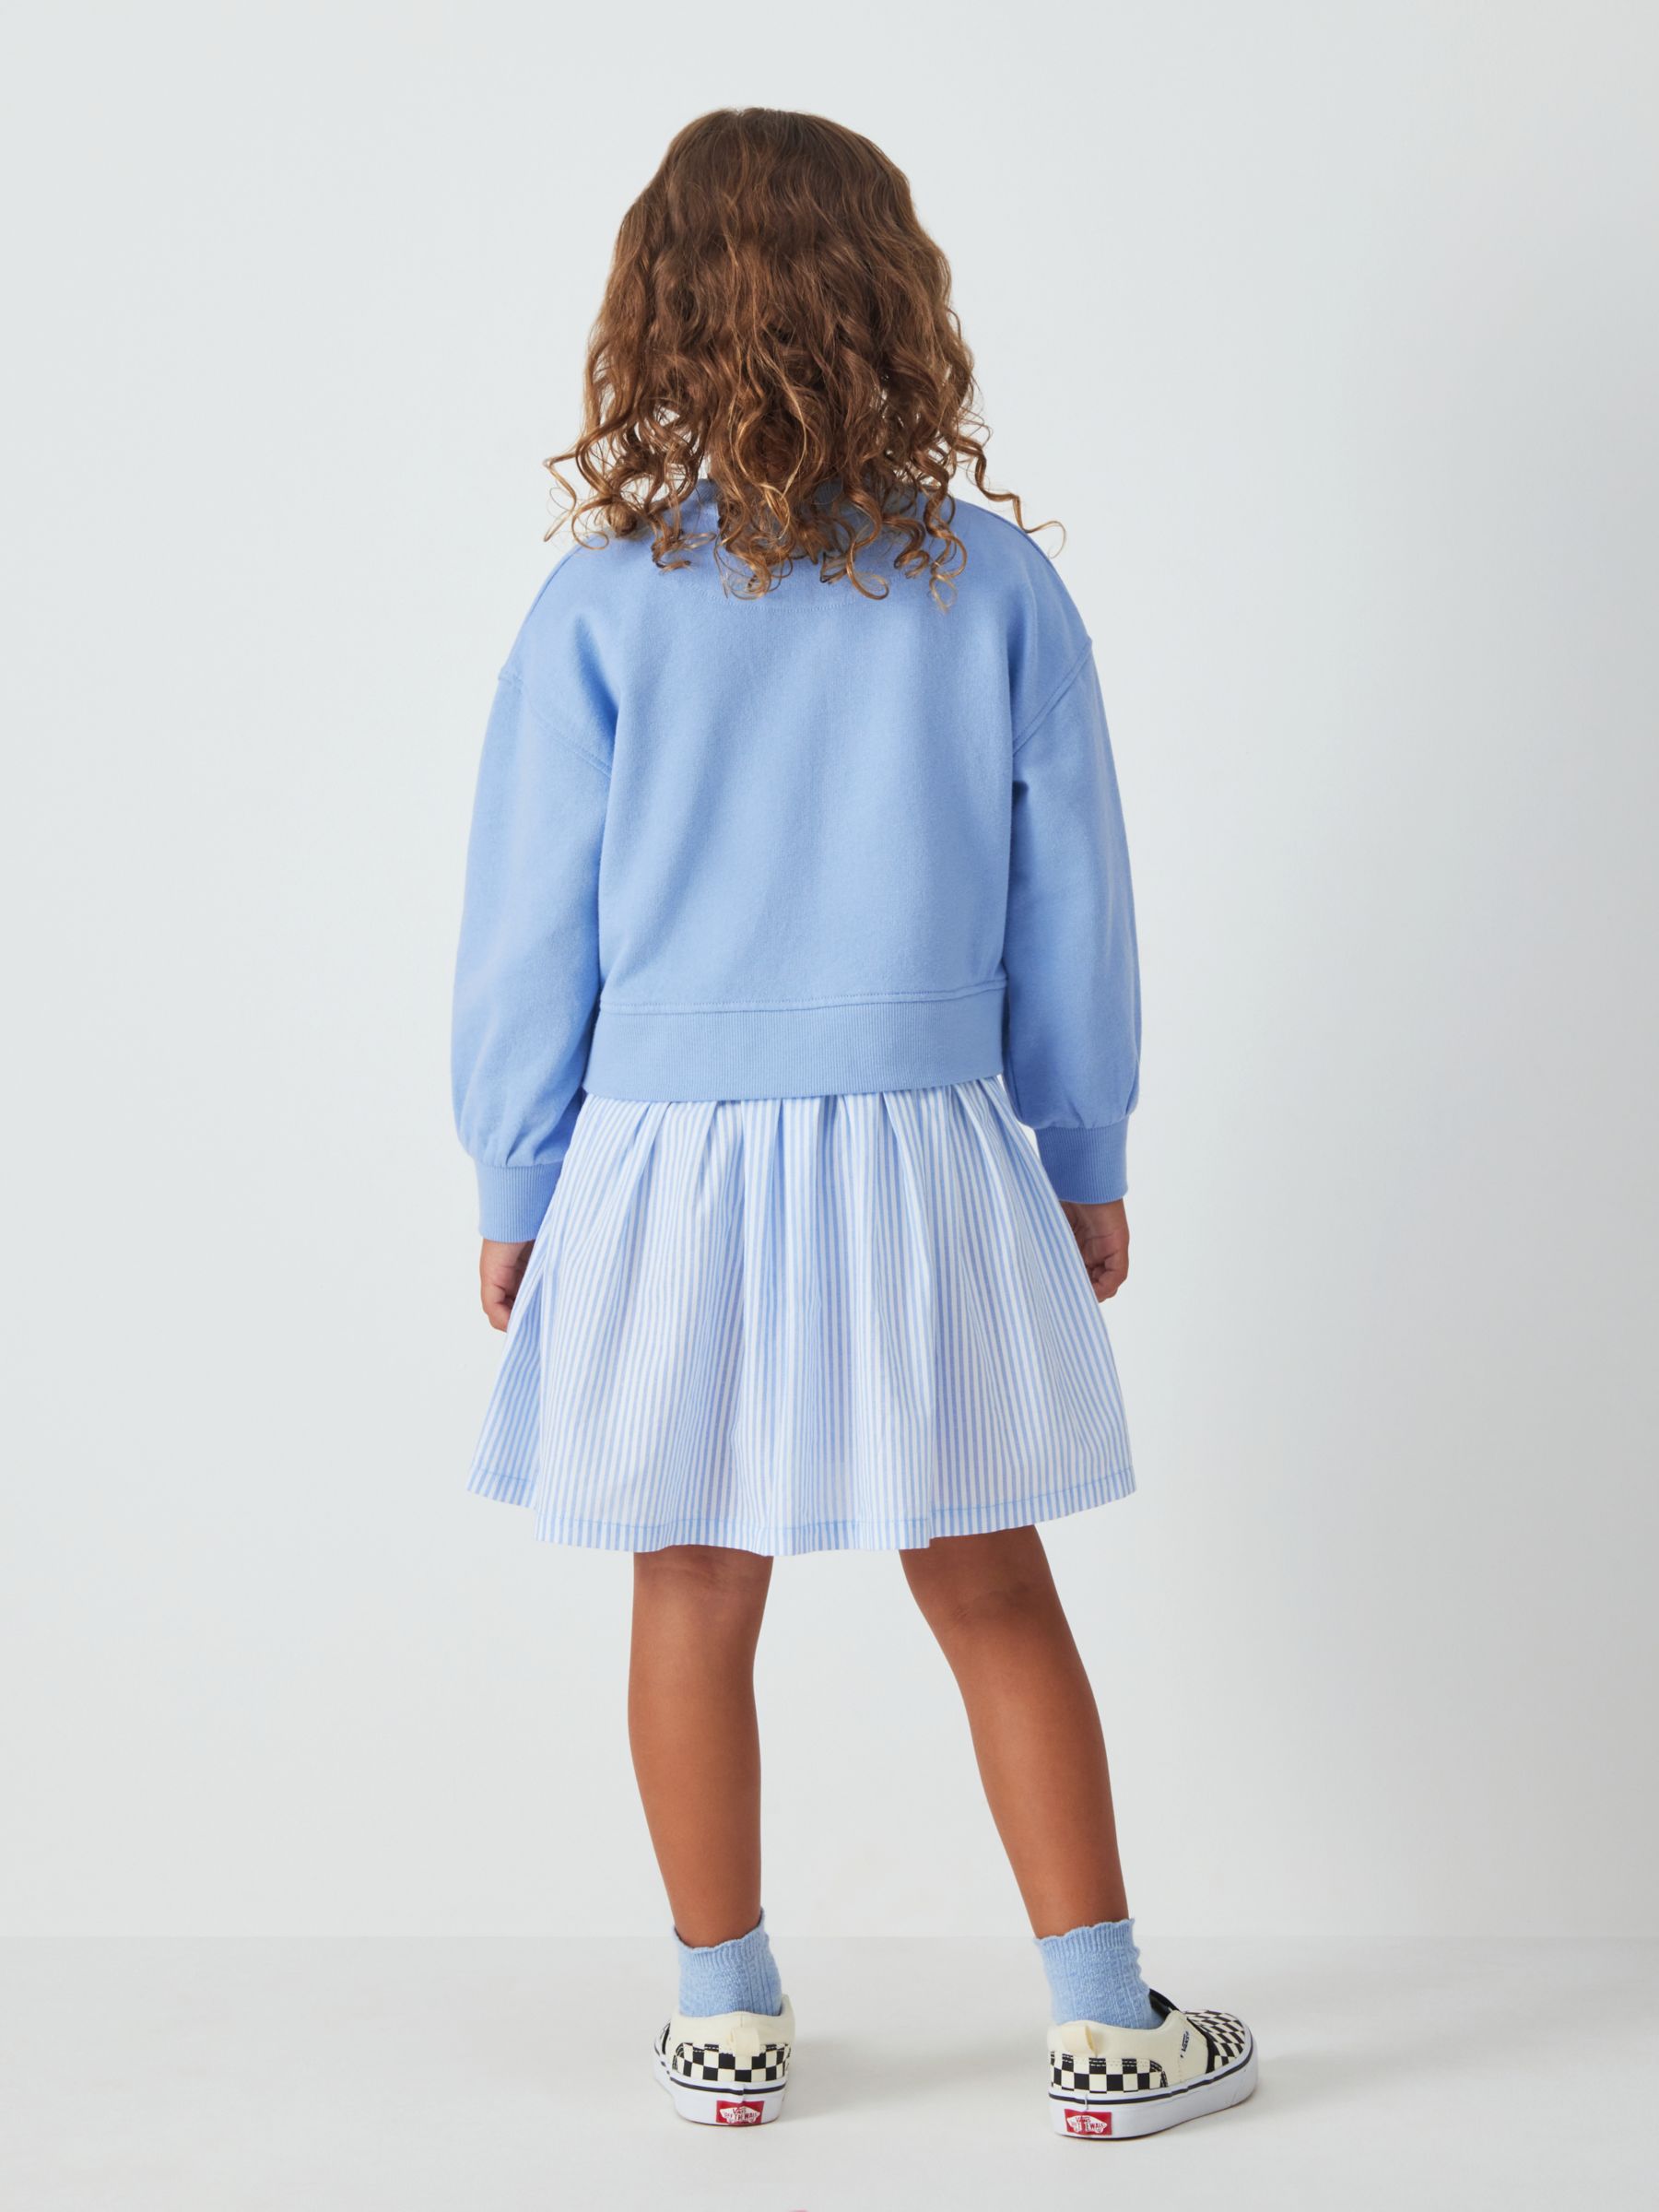 John Lewis Kids' Half & Half Sweat Pinstripe Dress, Bel Air Blue, 10 years